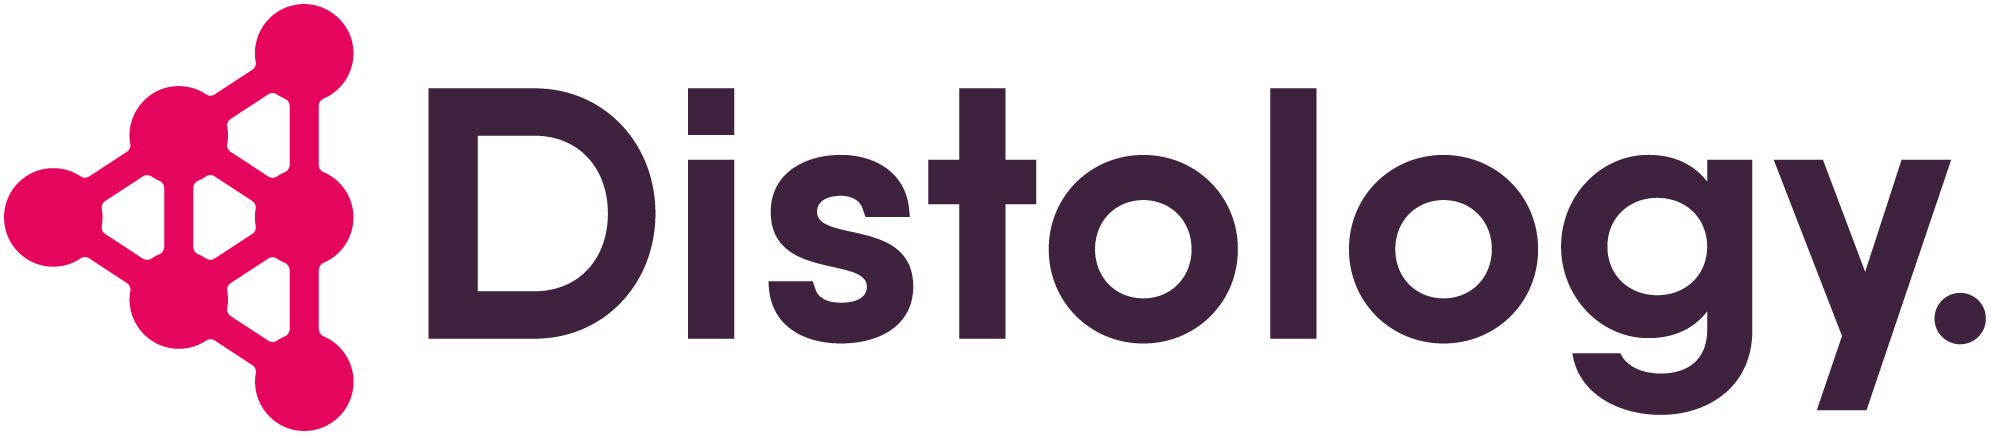 Distology logo